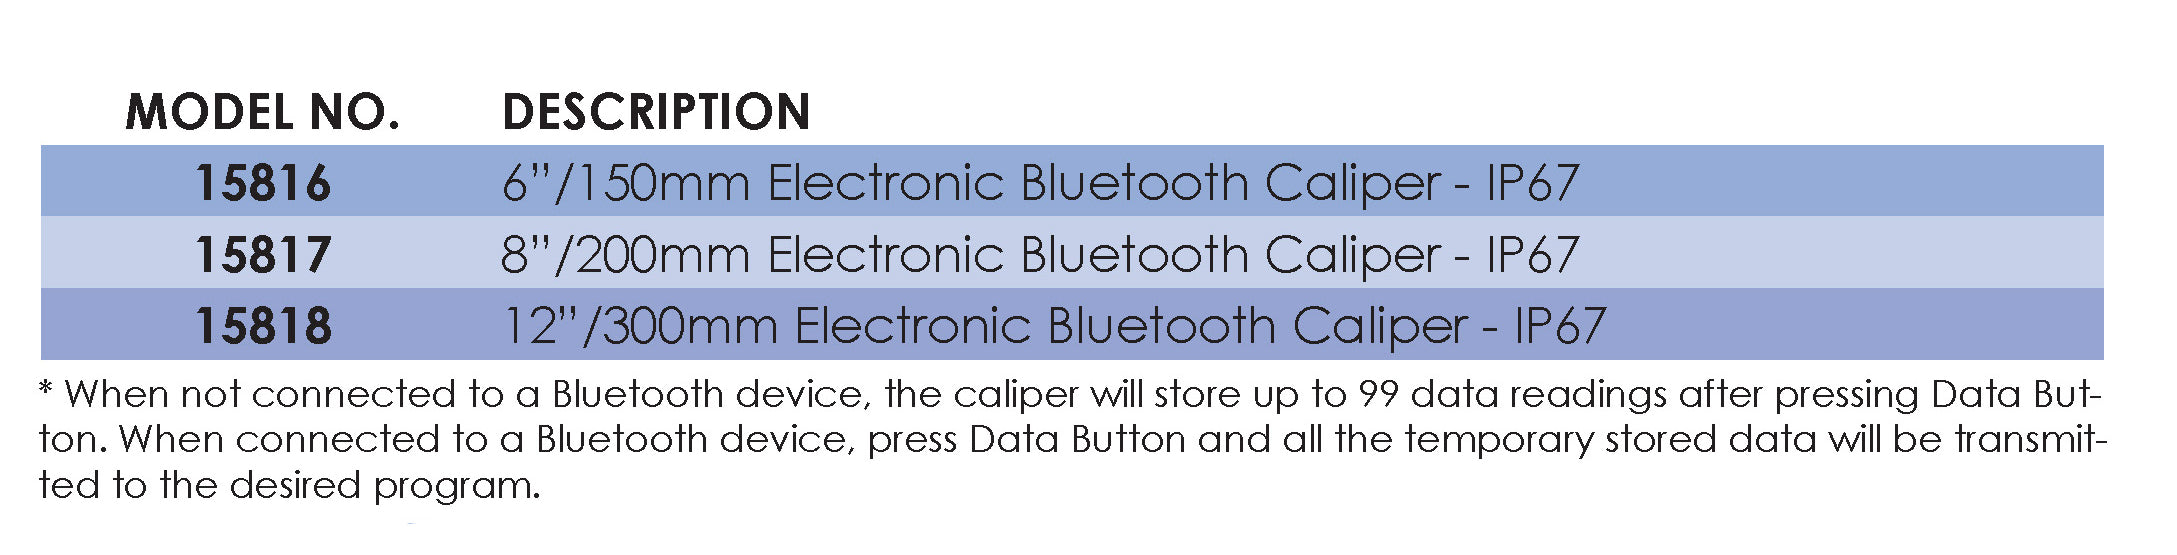 Electronic Bluetooth Calipers - IP67